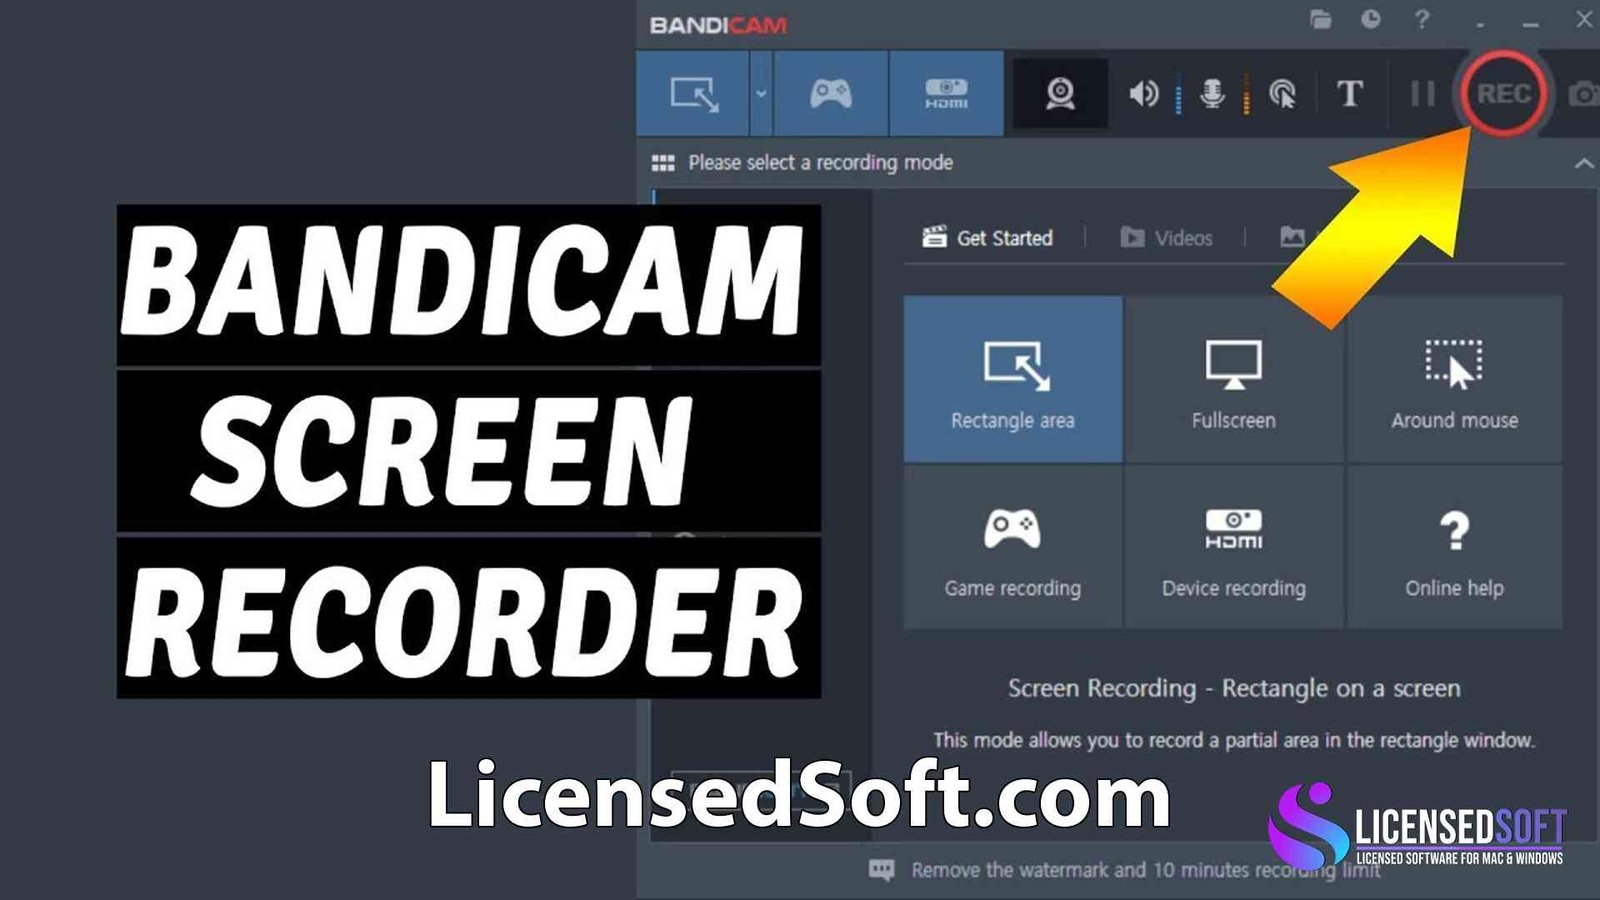 Bandicam 6.2.4.2083 Full Premium Version Cover Image By LicensedSoft